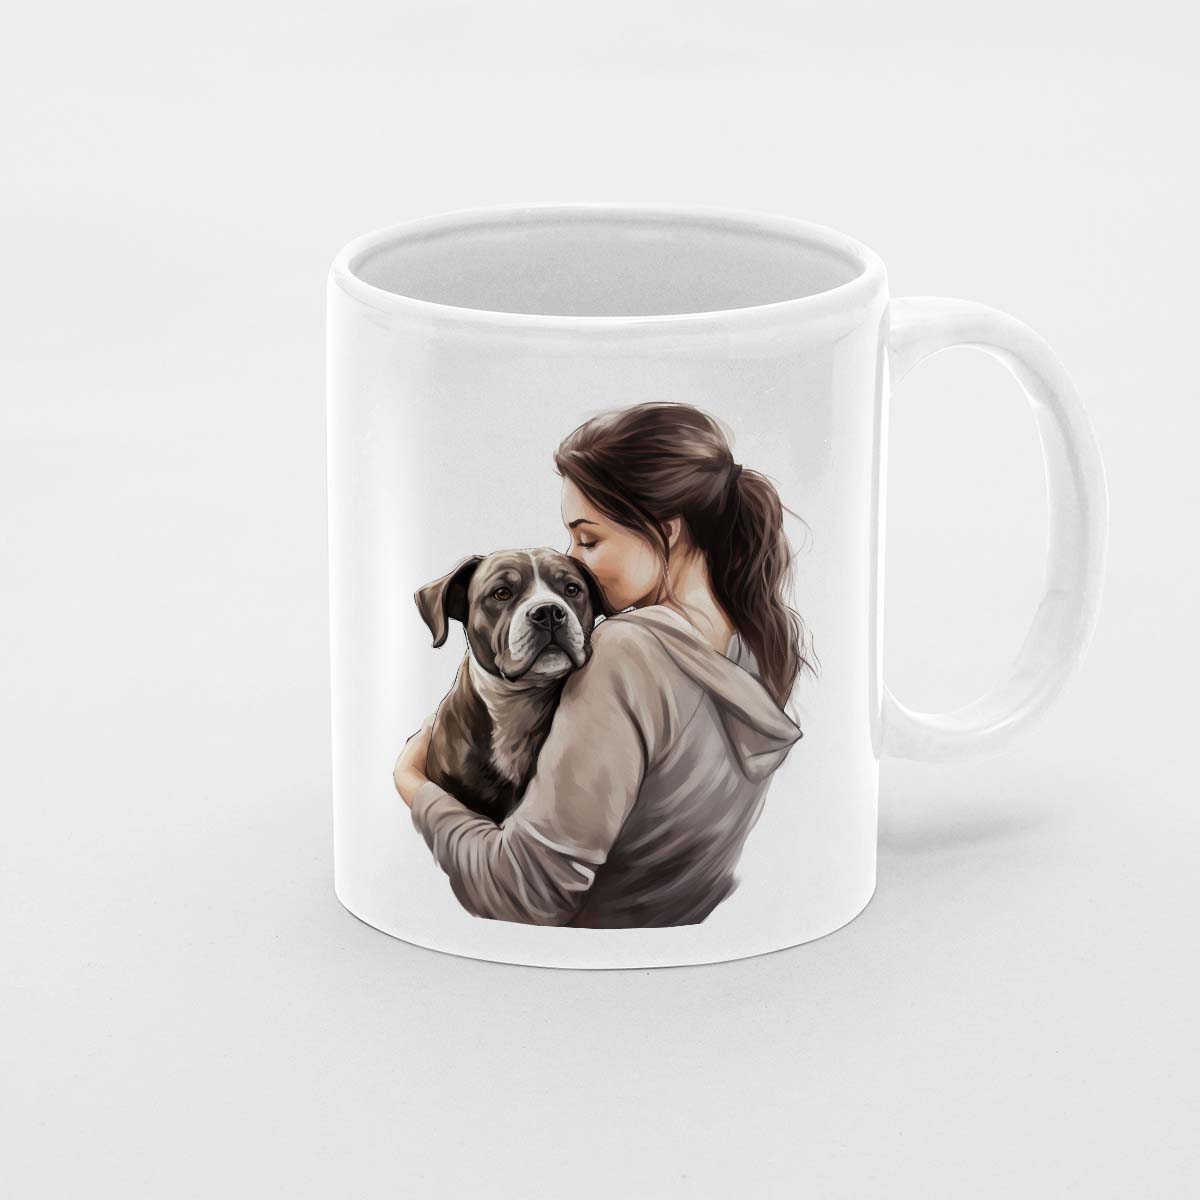 Custom Dog Mom Mug, Cute Mom and Pitbull Love Ceramic Mug, Best Friends Girl With Dog, Dog Owner Gift, Dog Lover Mug, Gift For Dog Mom, Gift For Dog Owner, Dog Coffee Mugs, Dog Mom Coffee Mug, Mother's Day Gift